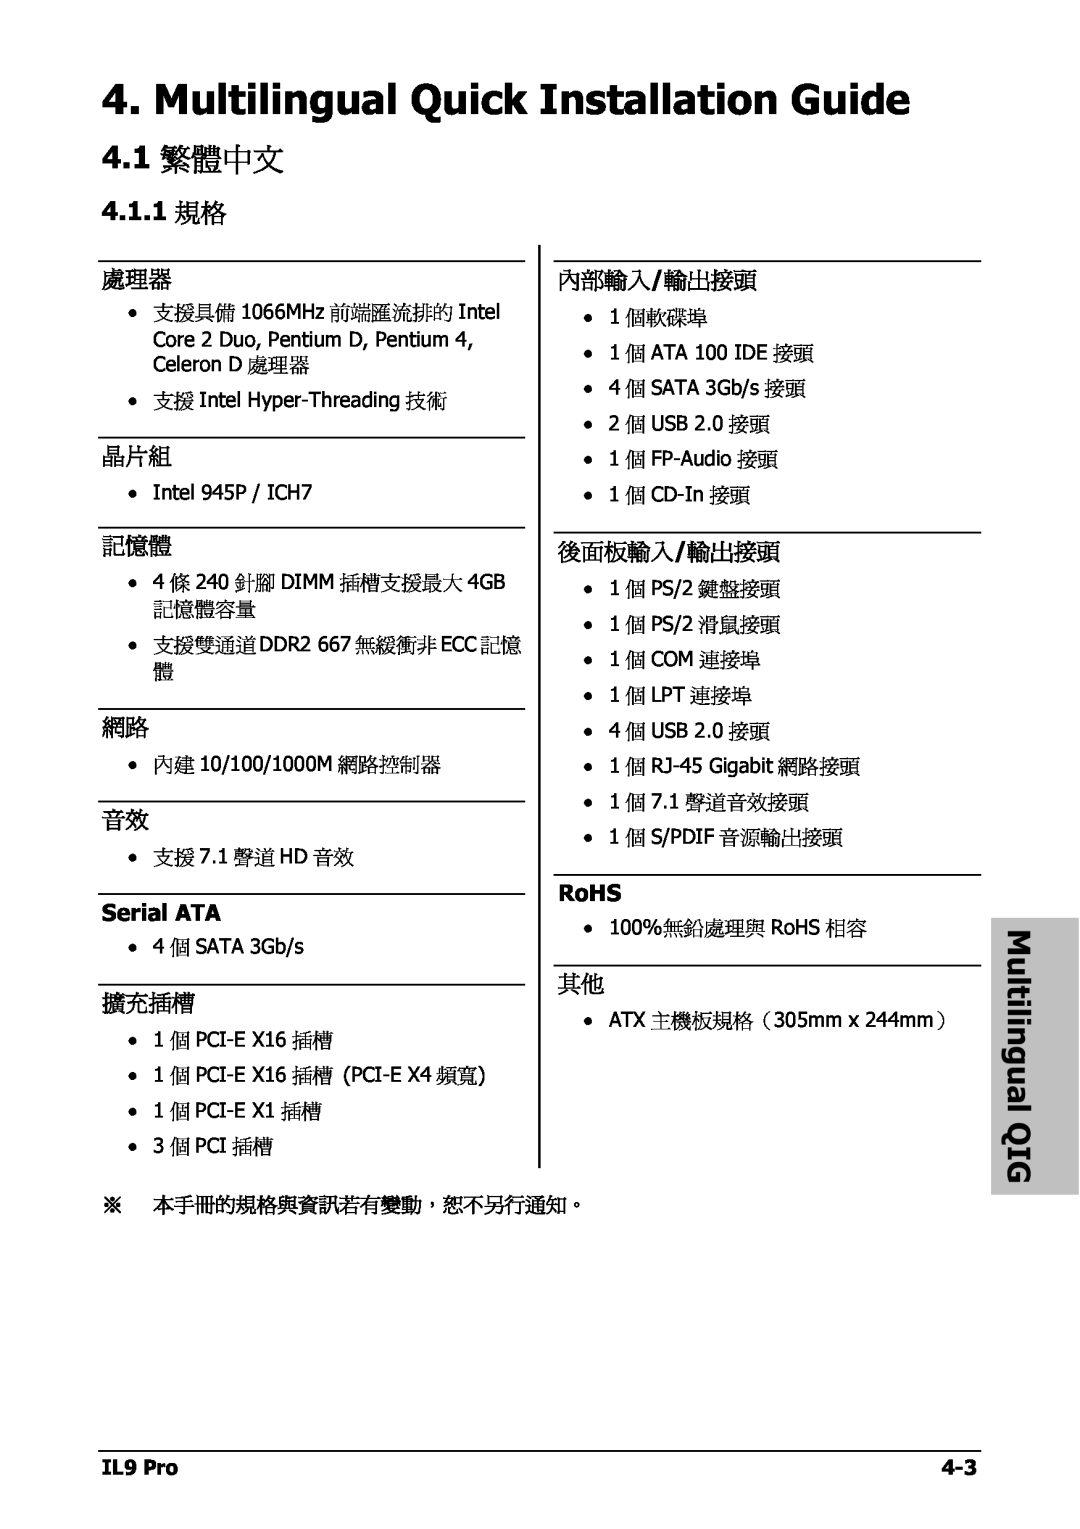 Nextar IL9 PRO Multilingual Quick Installation Guide, 4.1 繁體中文, Multilingual QIG, 4.1.1 規格, 擴充插槽, 內部輸入/輸出接頭, 後面板輸入/輸出接頭 